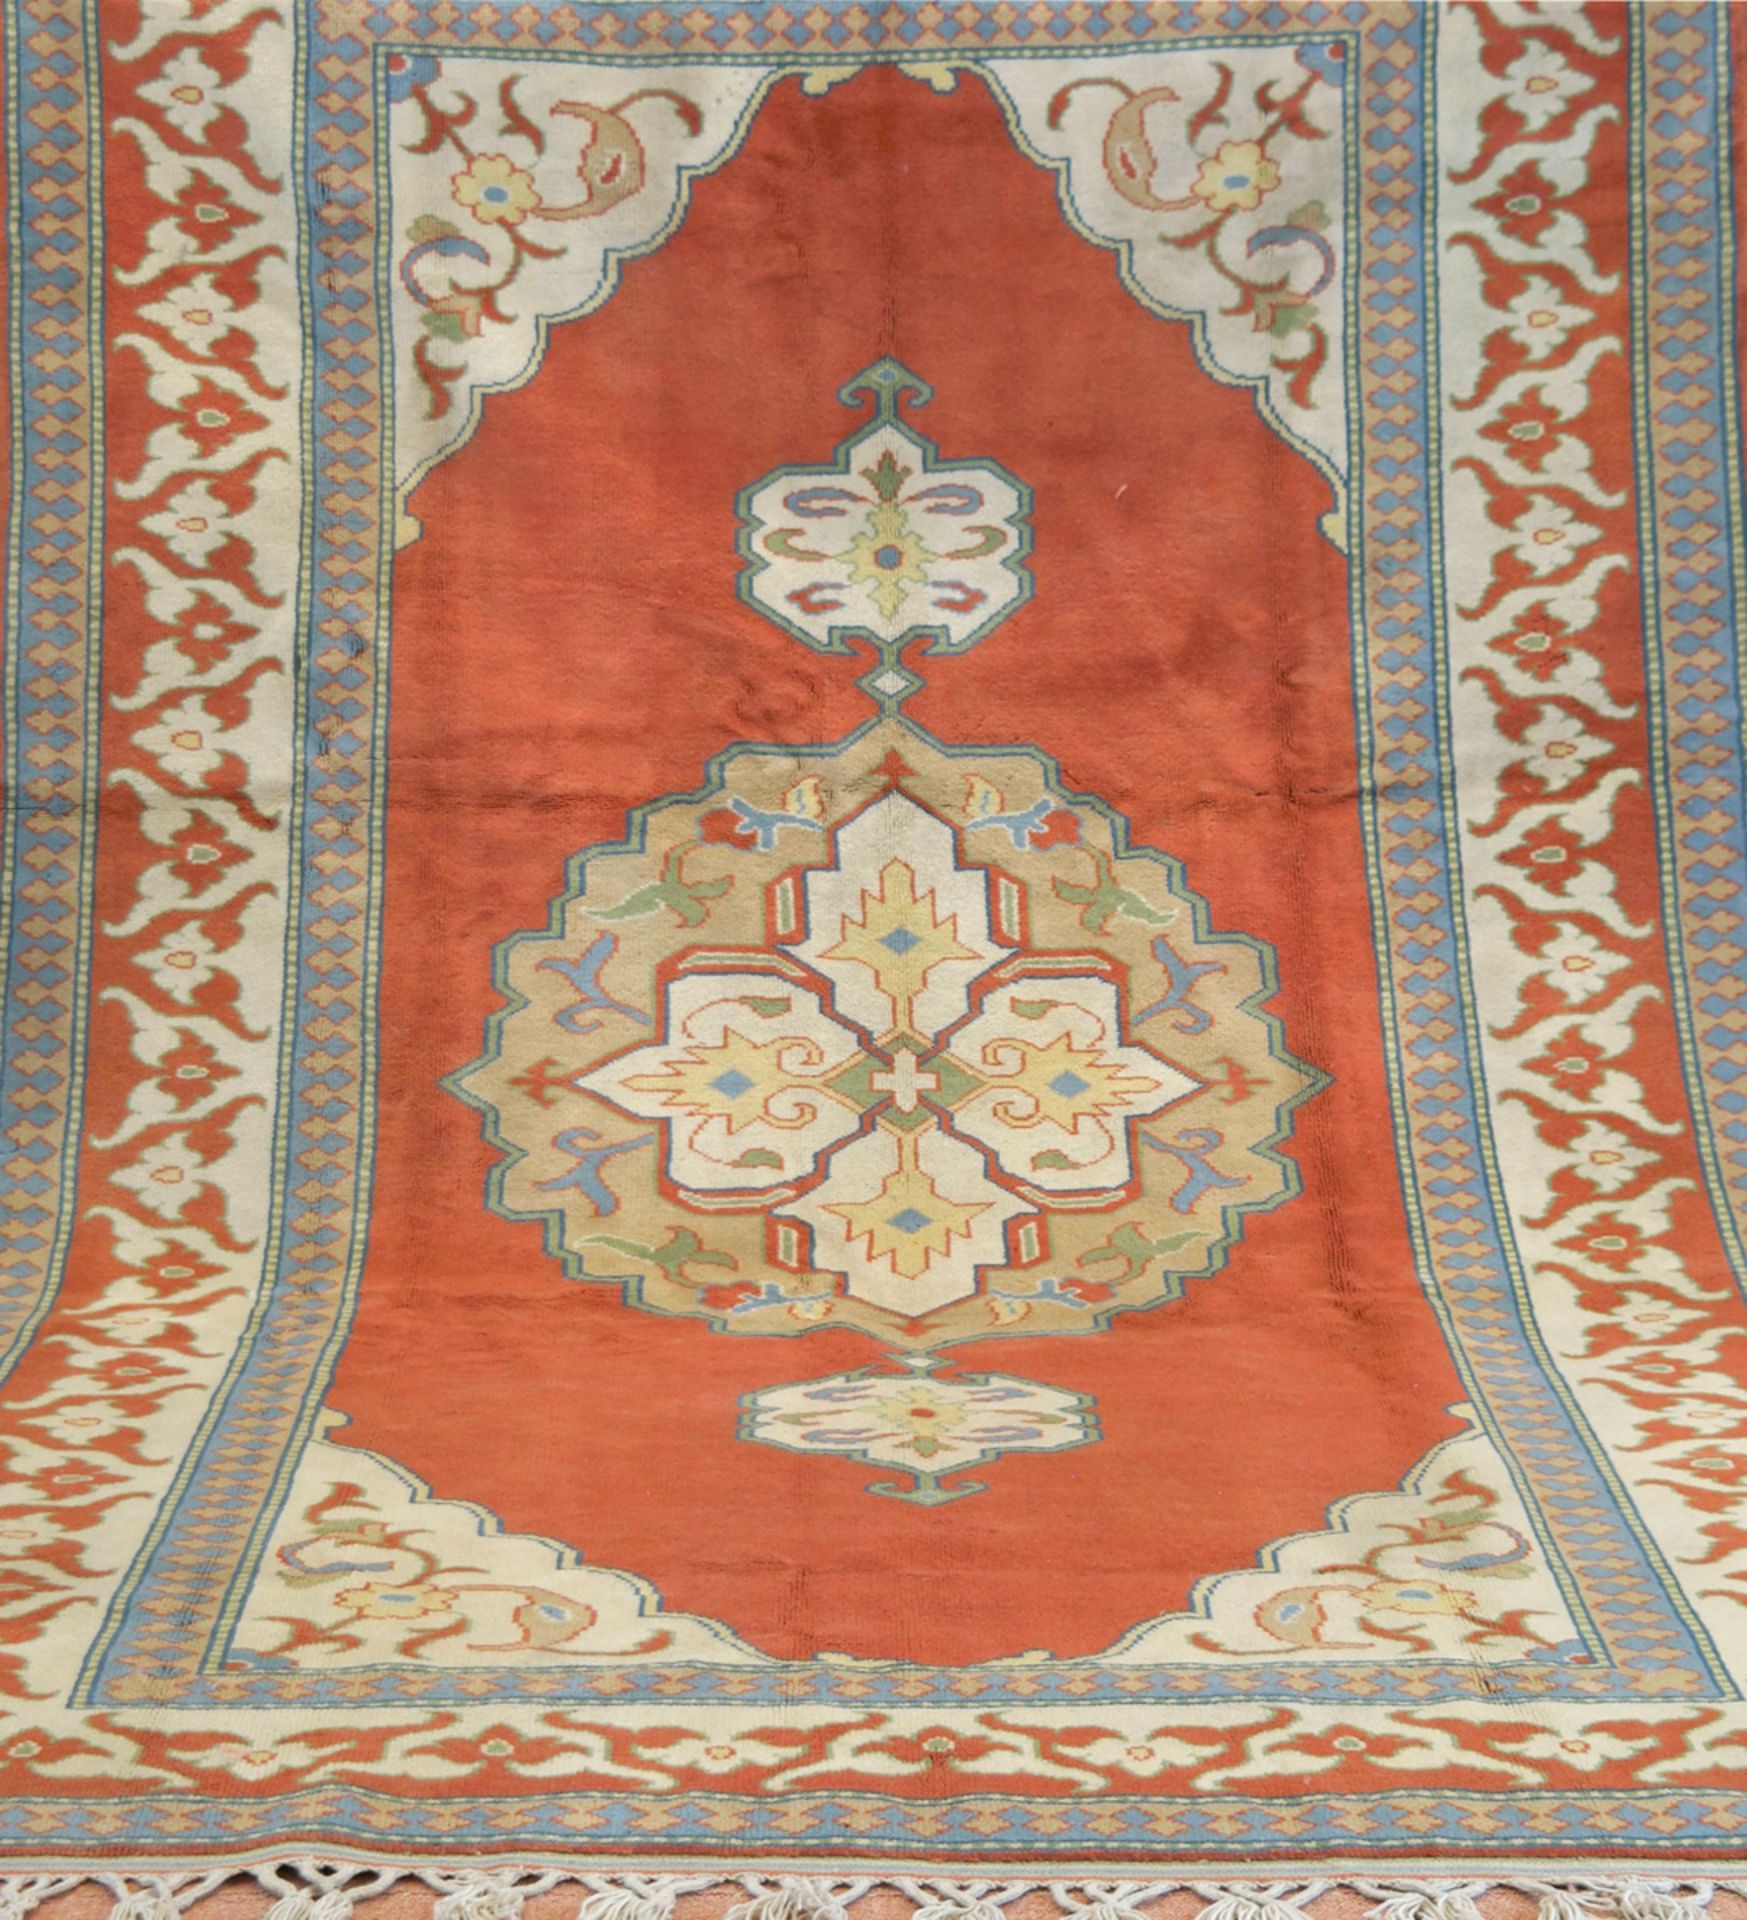 Türke, rotgrundig mit zentralem Medaillon u. floralen Motiven, 305x200 cm,